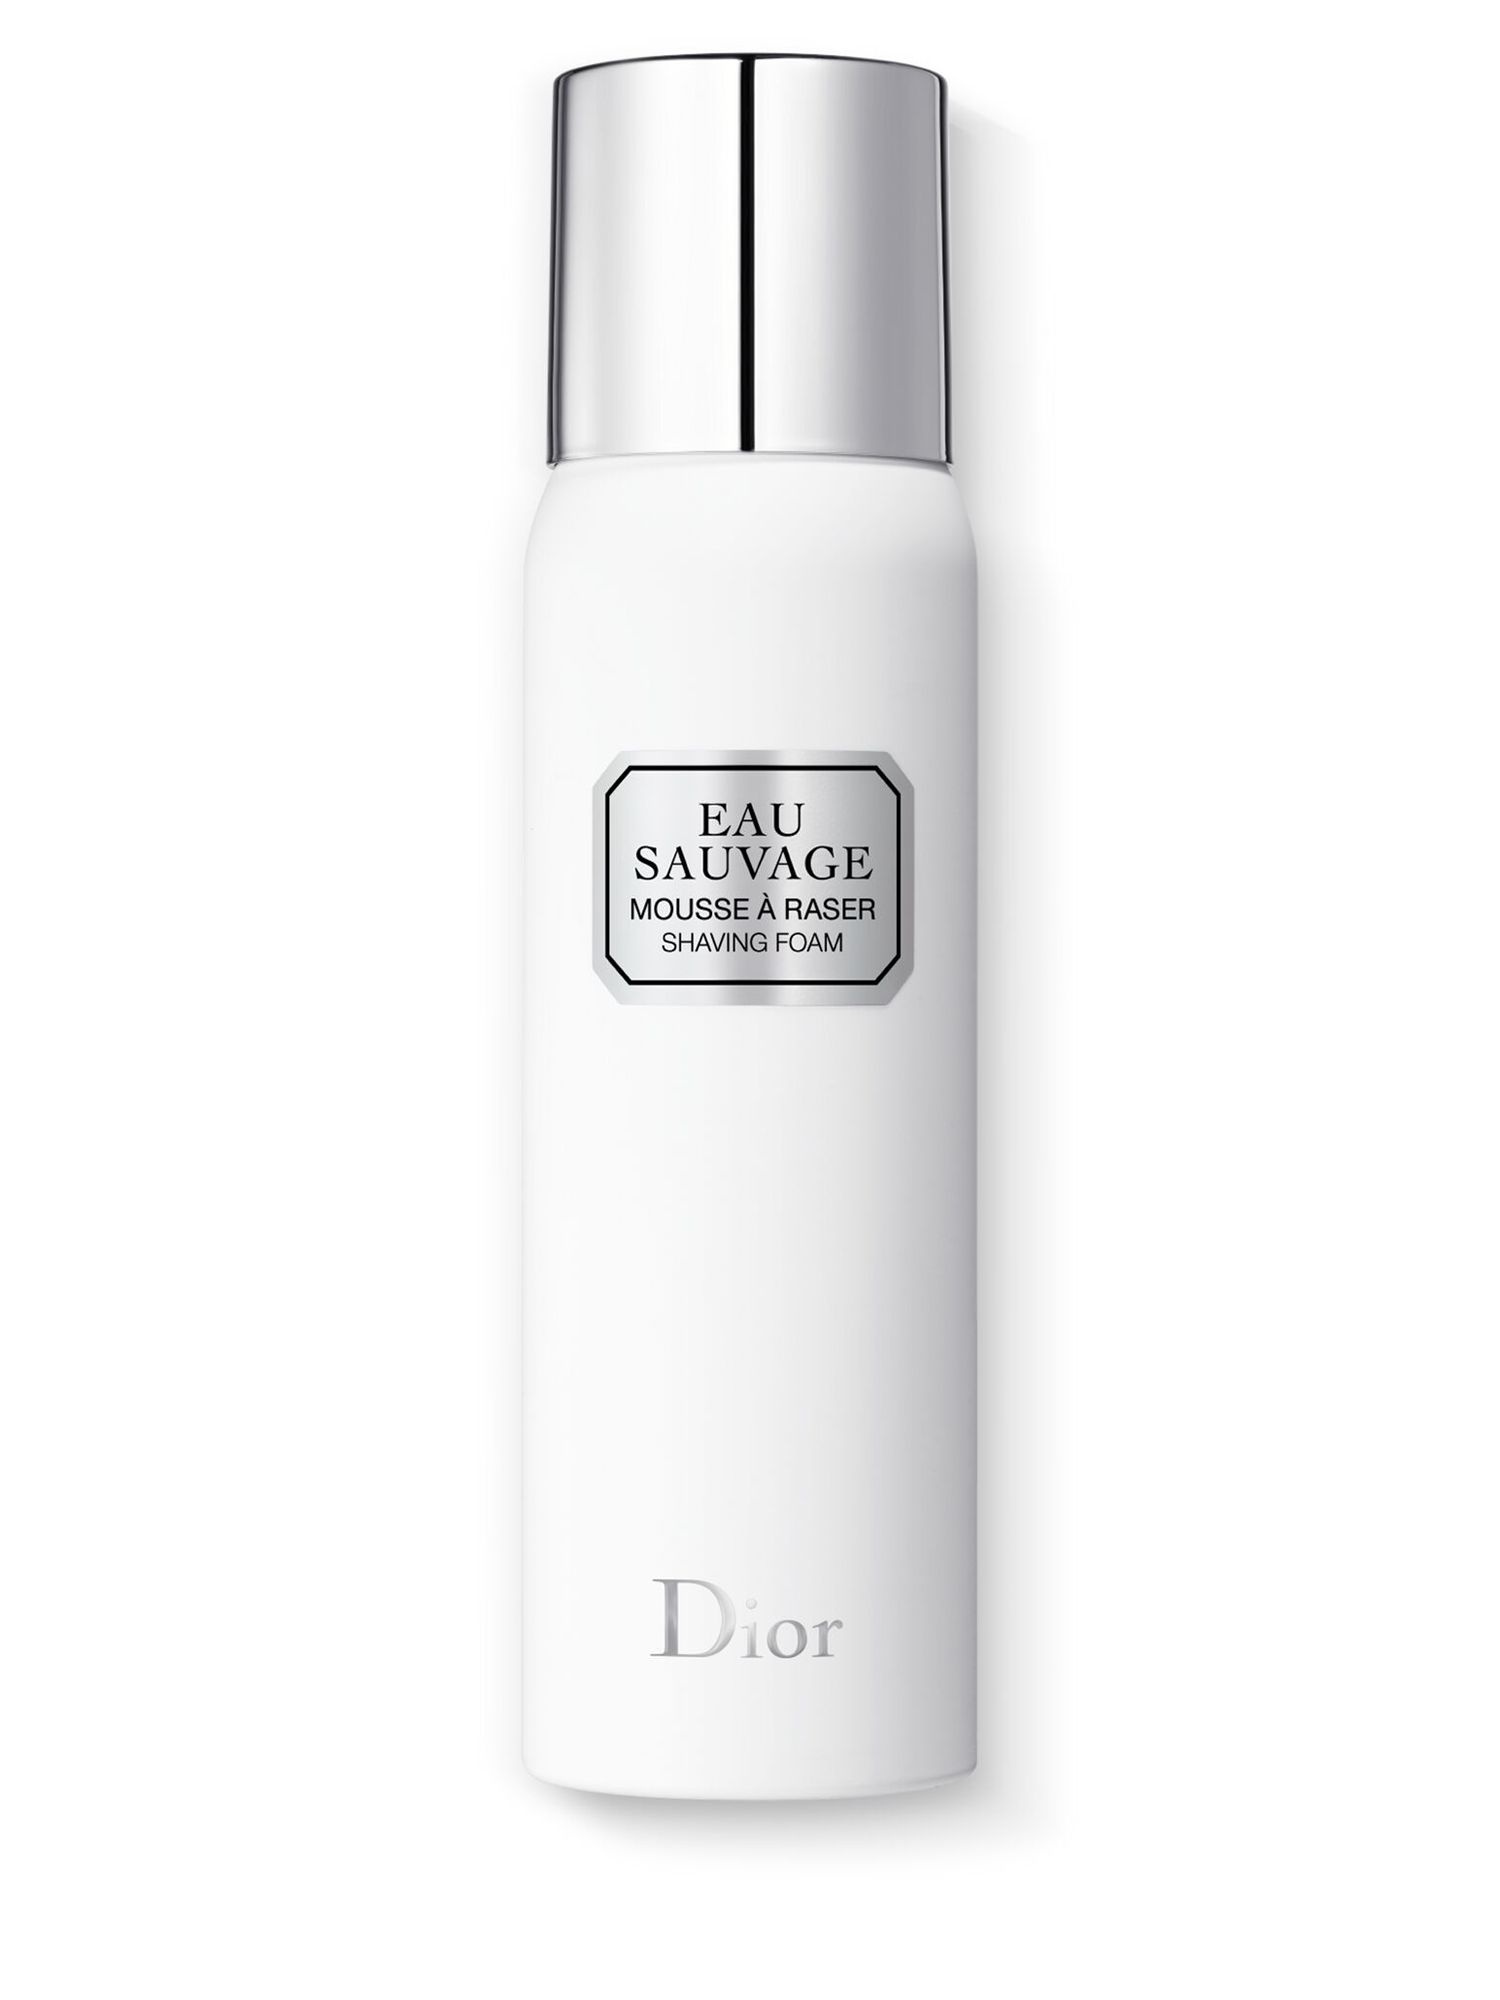 Dior Eau Sauvage Shaving Foam, 200ml at John Lewis & Partners